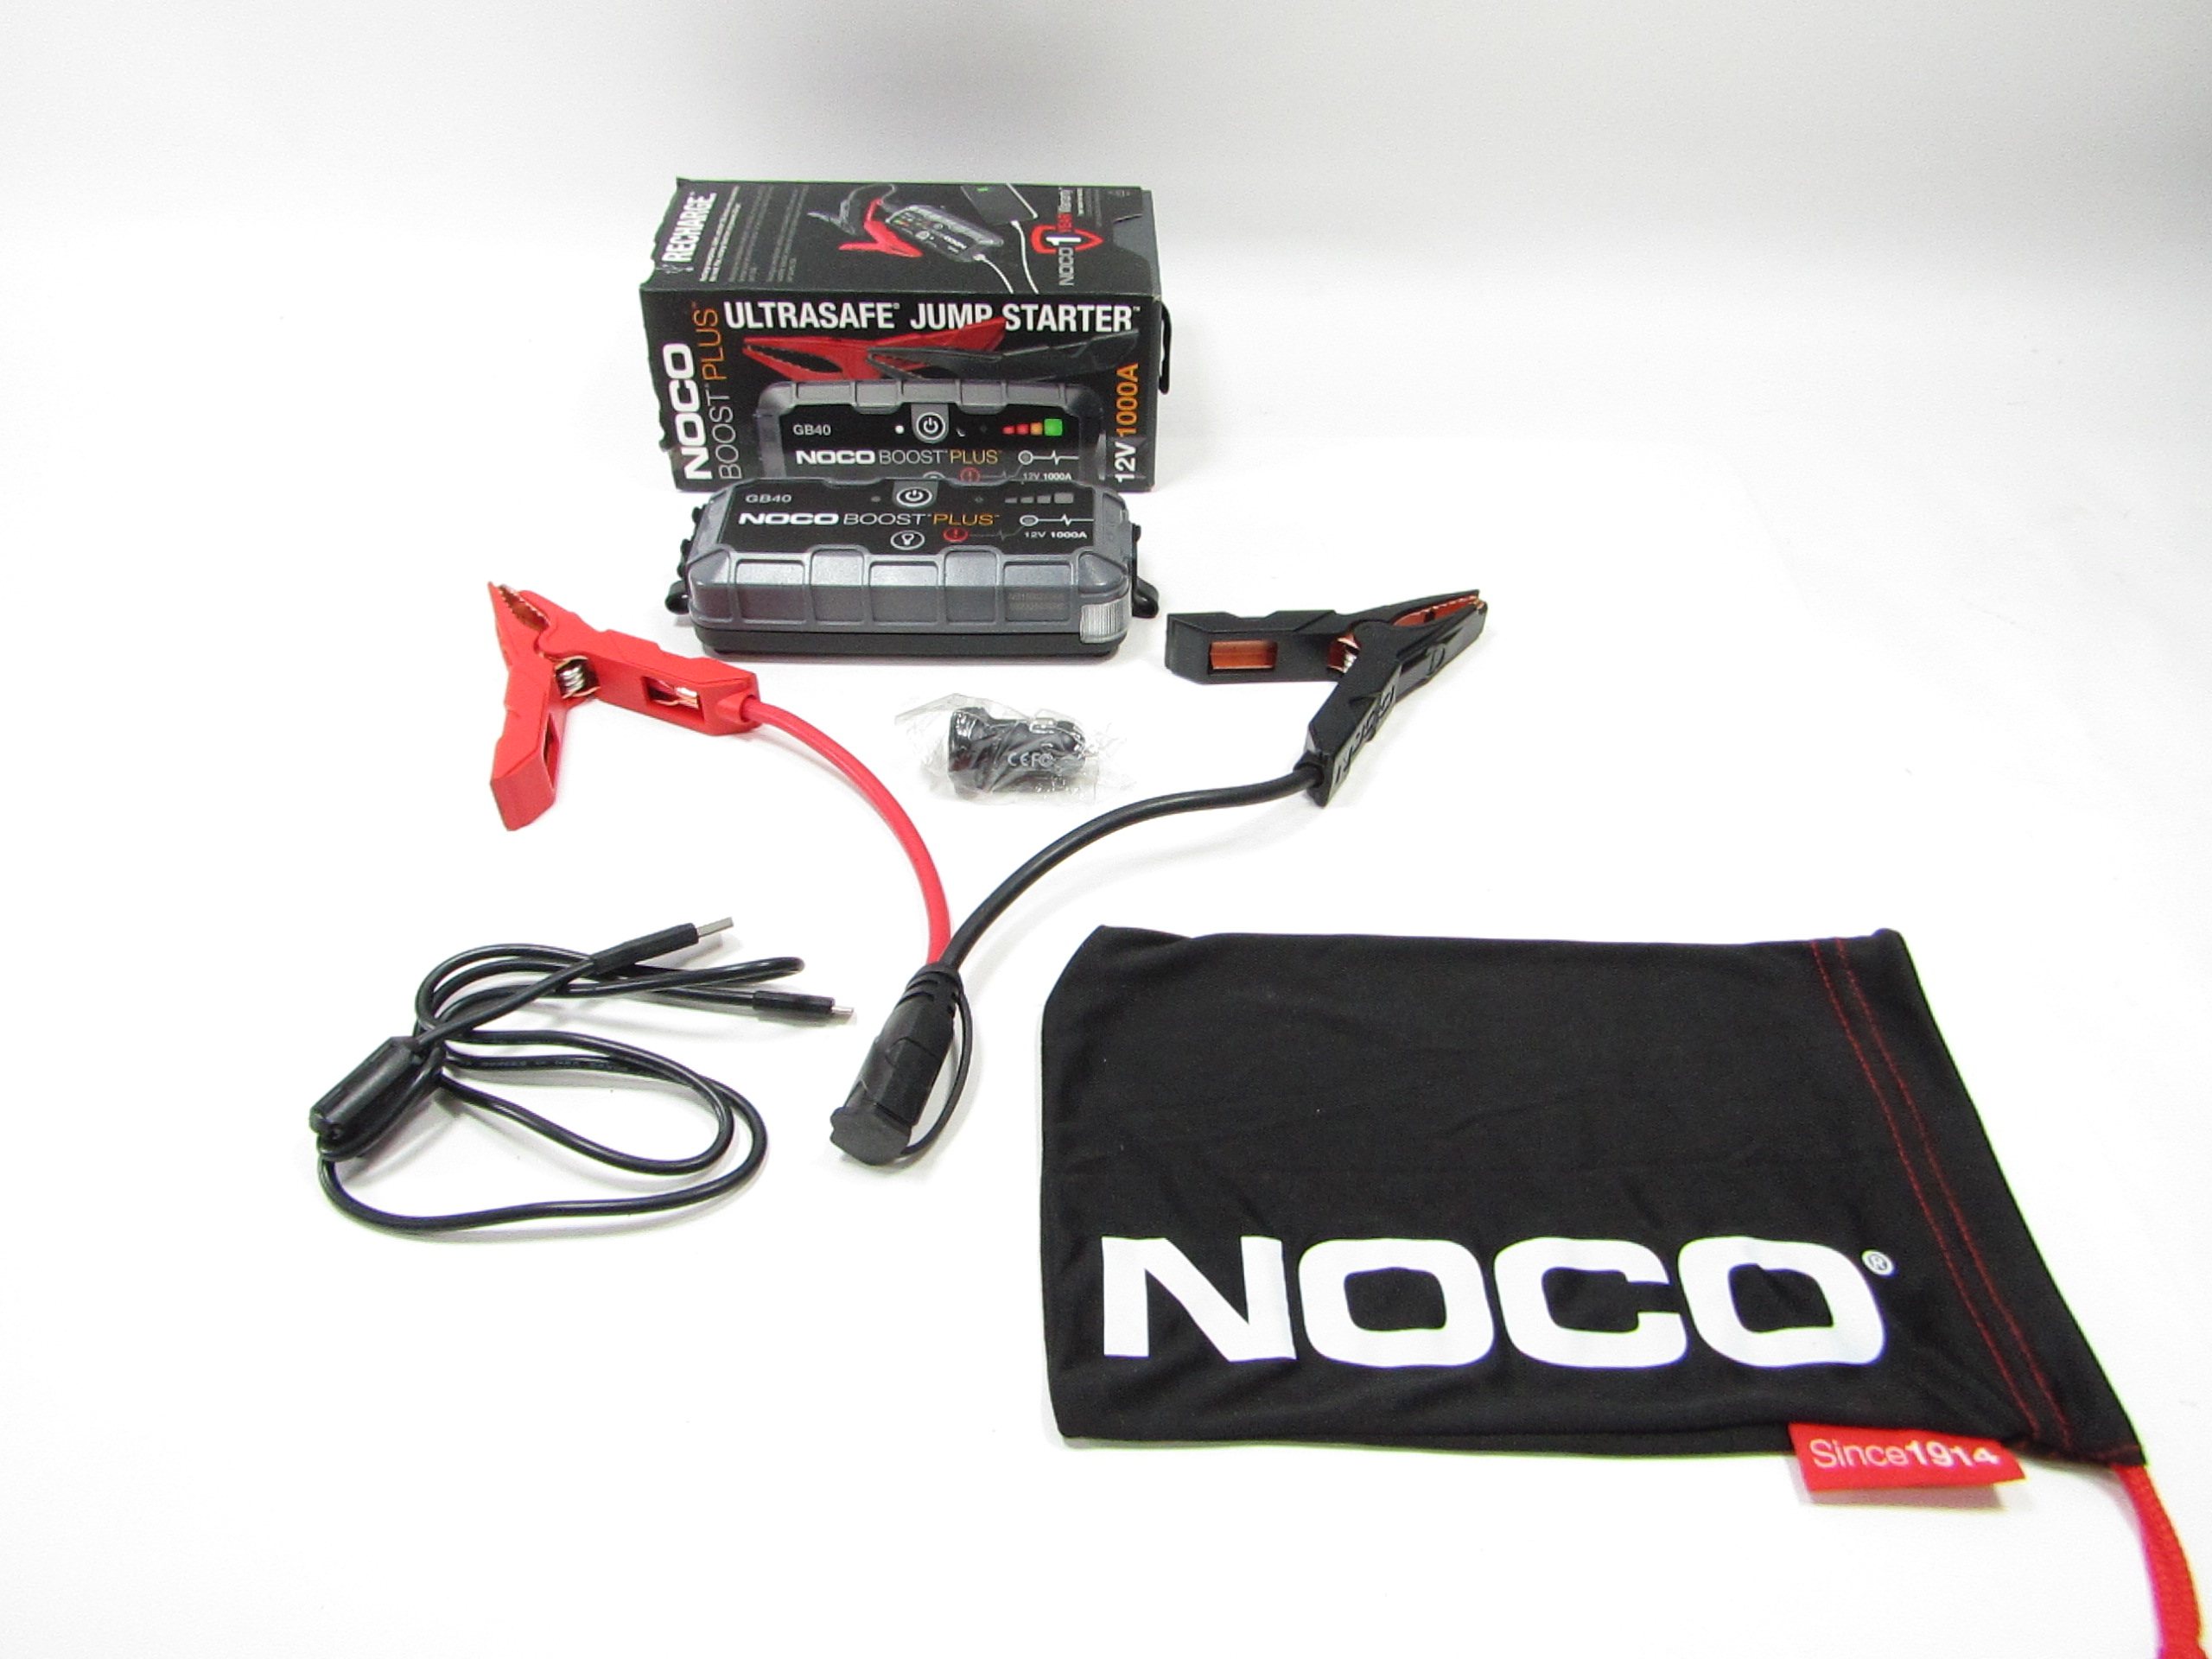 NOCO Boost Plus GB40 1000-Amp 12-Volt UltraSafe Lithium Jump Starter 7860